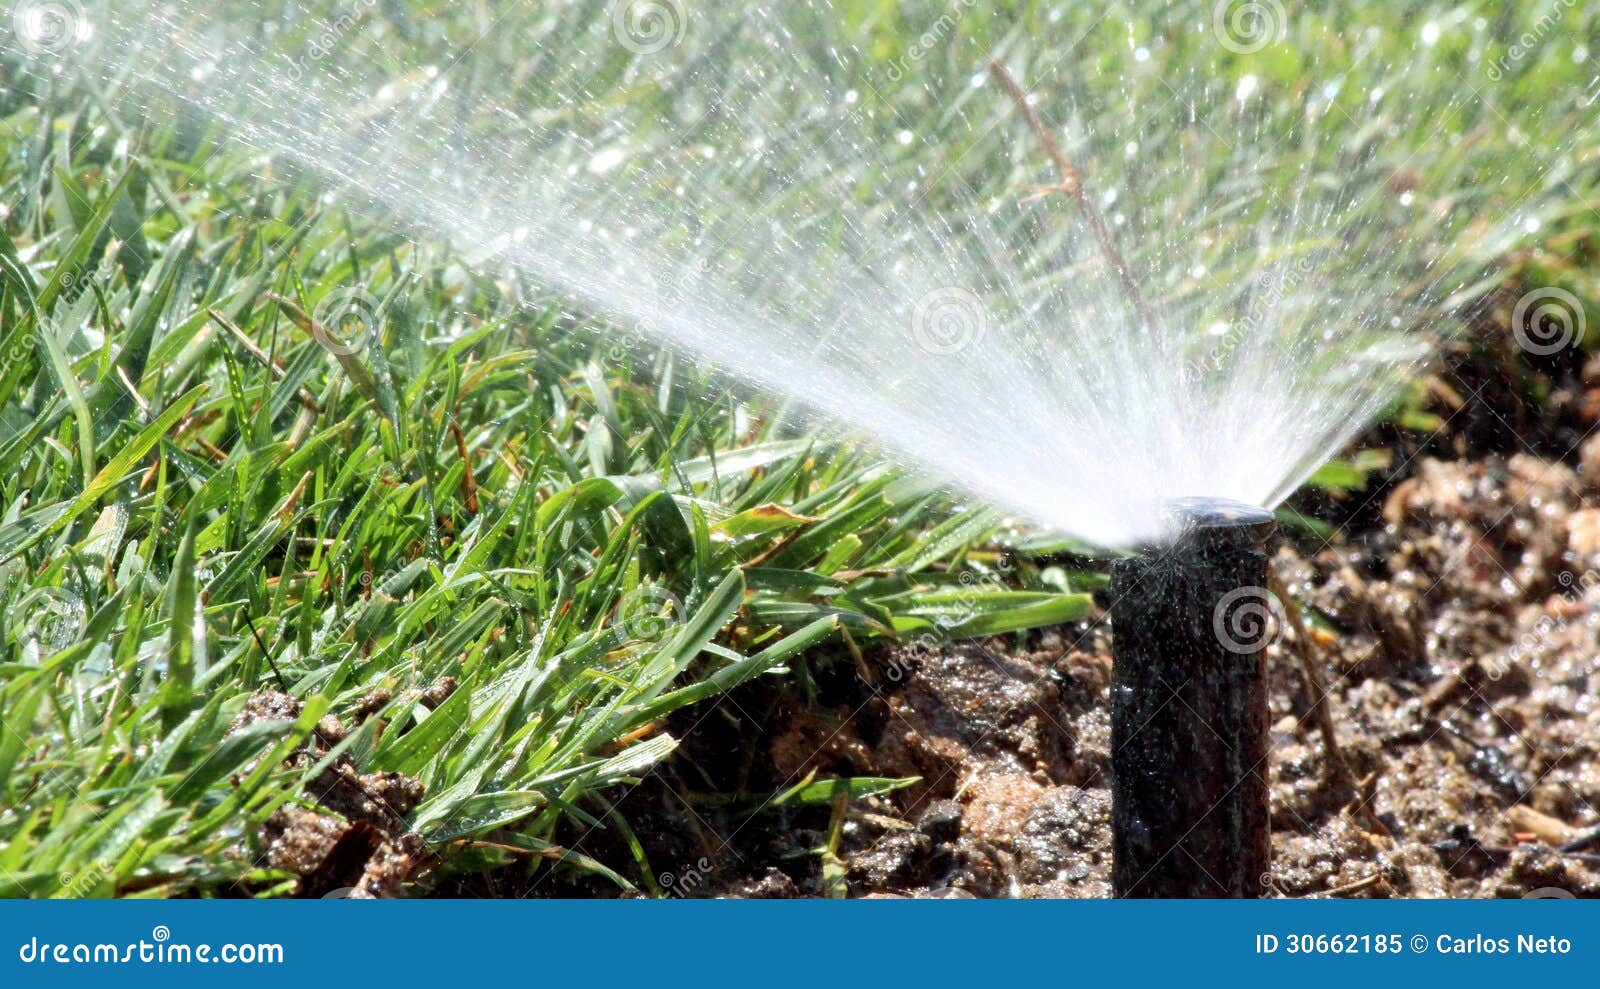 marketing teugels Van Garden Irrigation Spray System Watering Lawn Stock Image - Image of liquid,  growth: 30662185